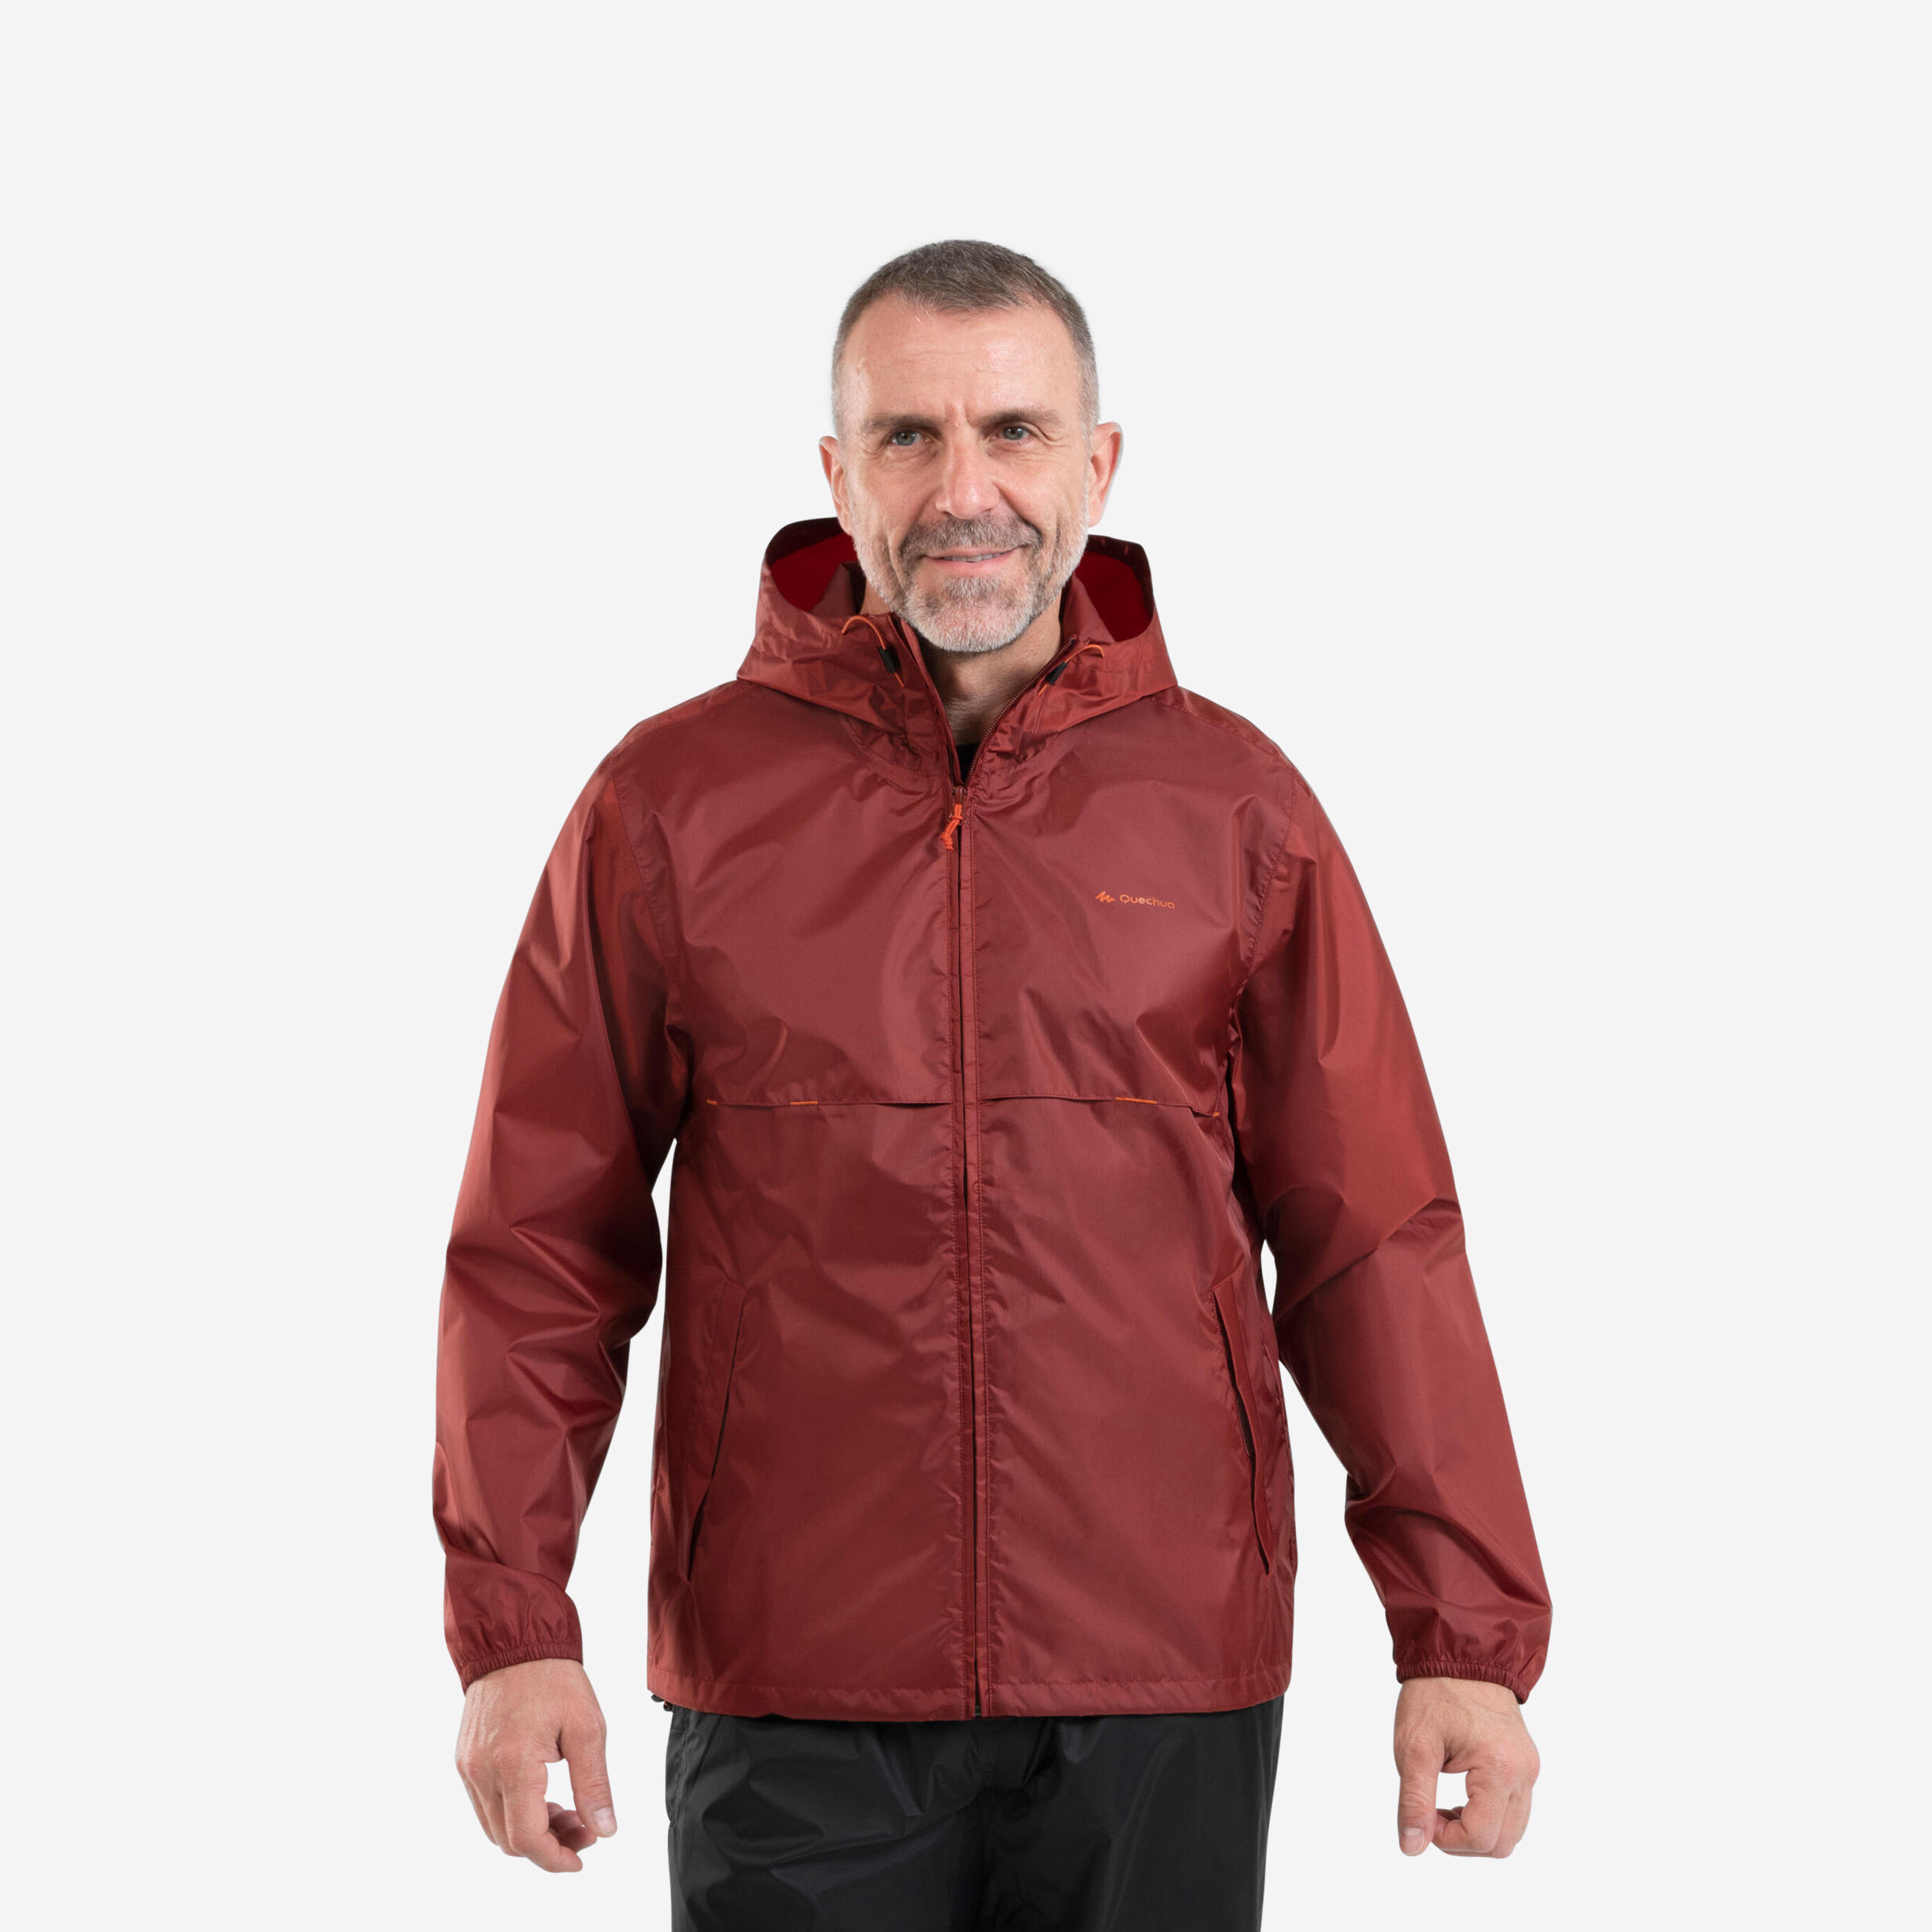 Men's Waterproof Hiking Jacket - Raincut Full Zip 1/8